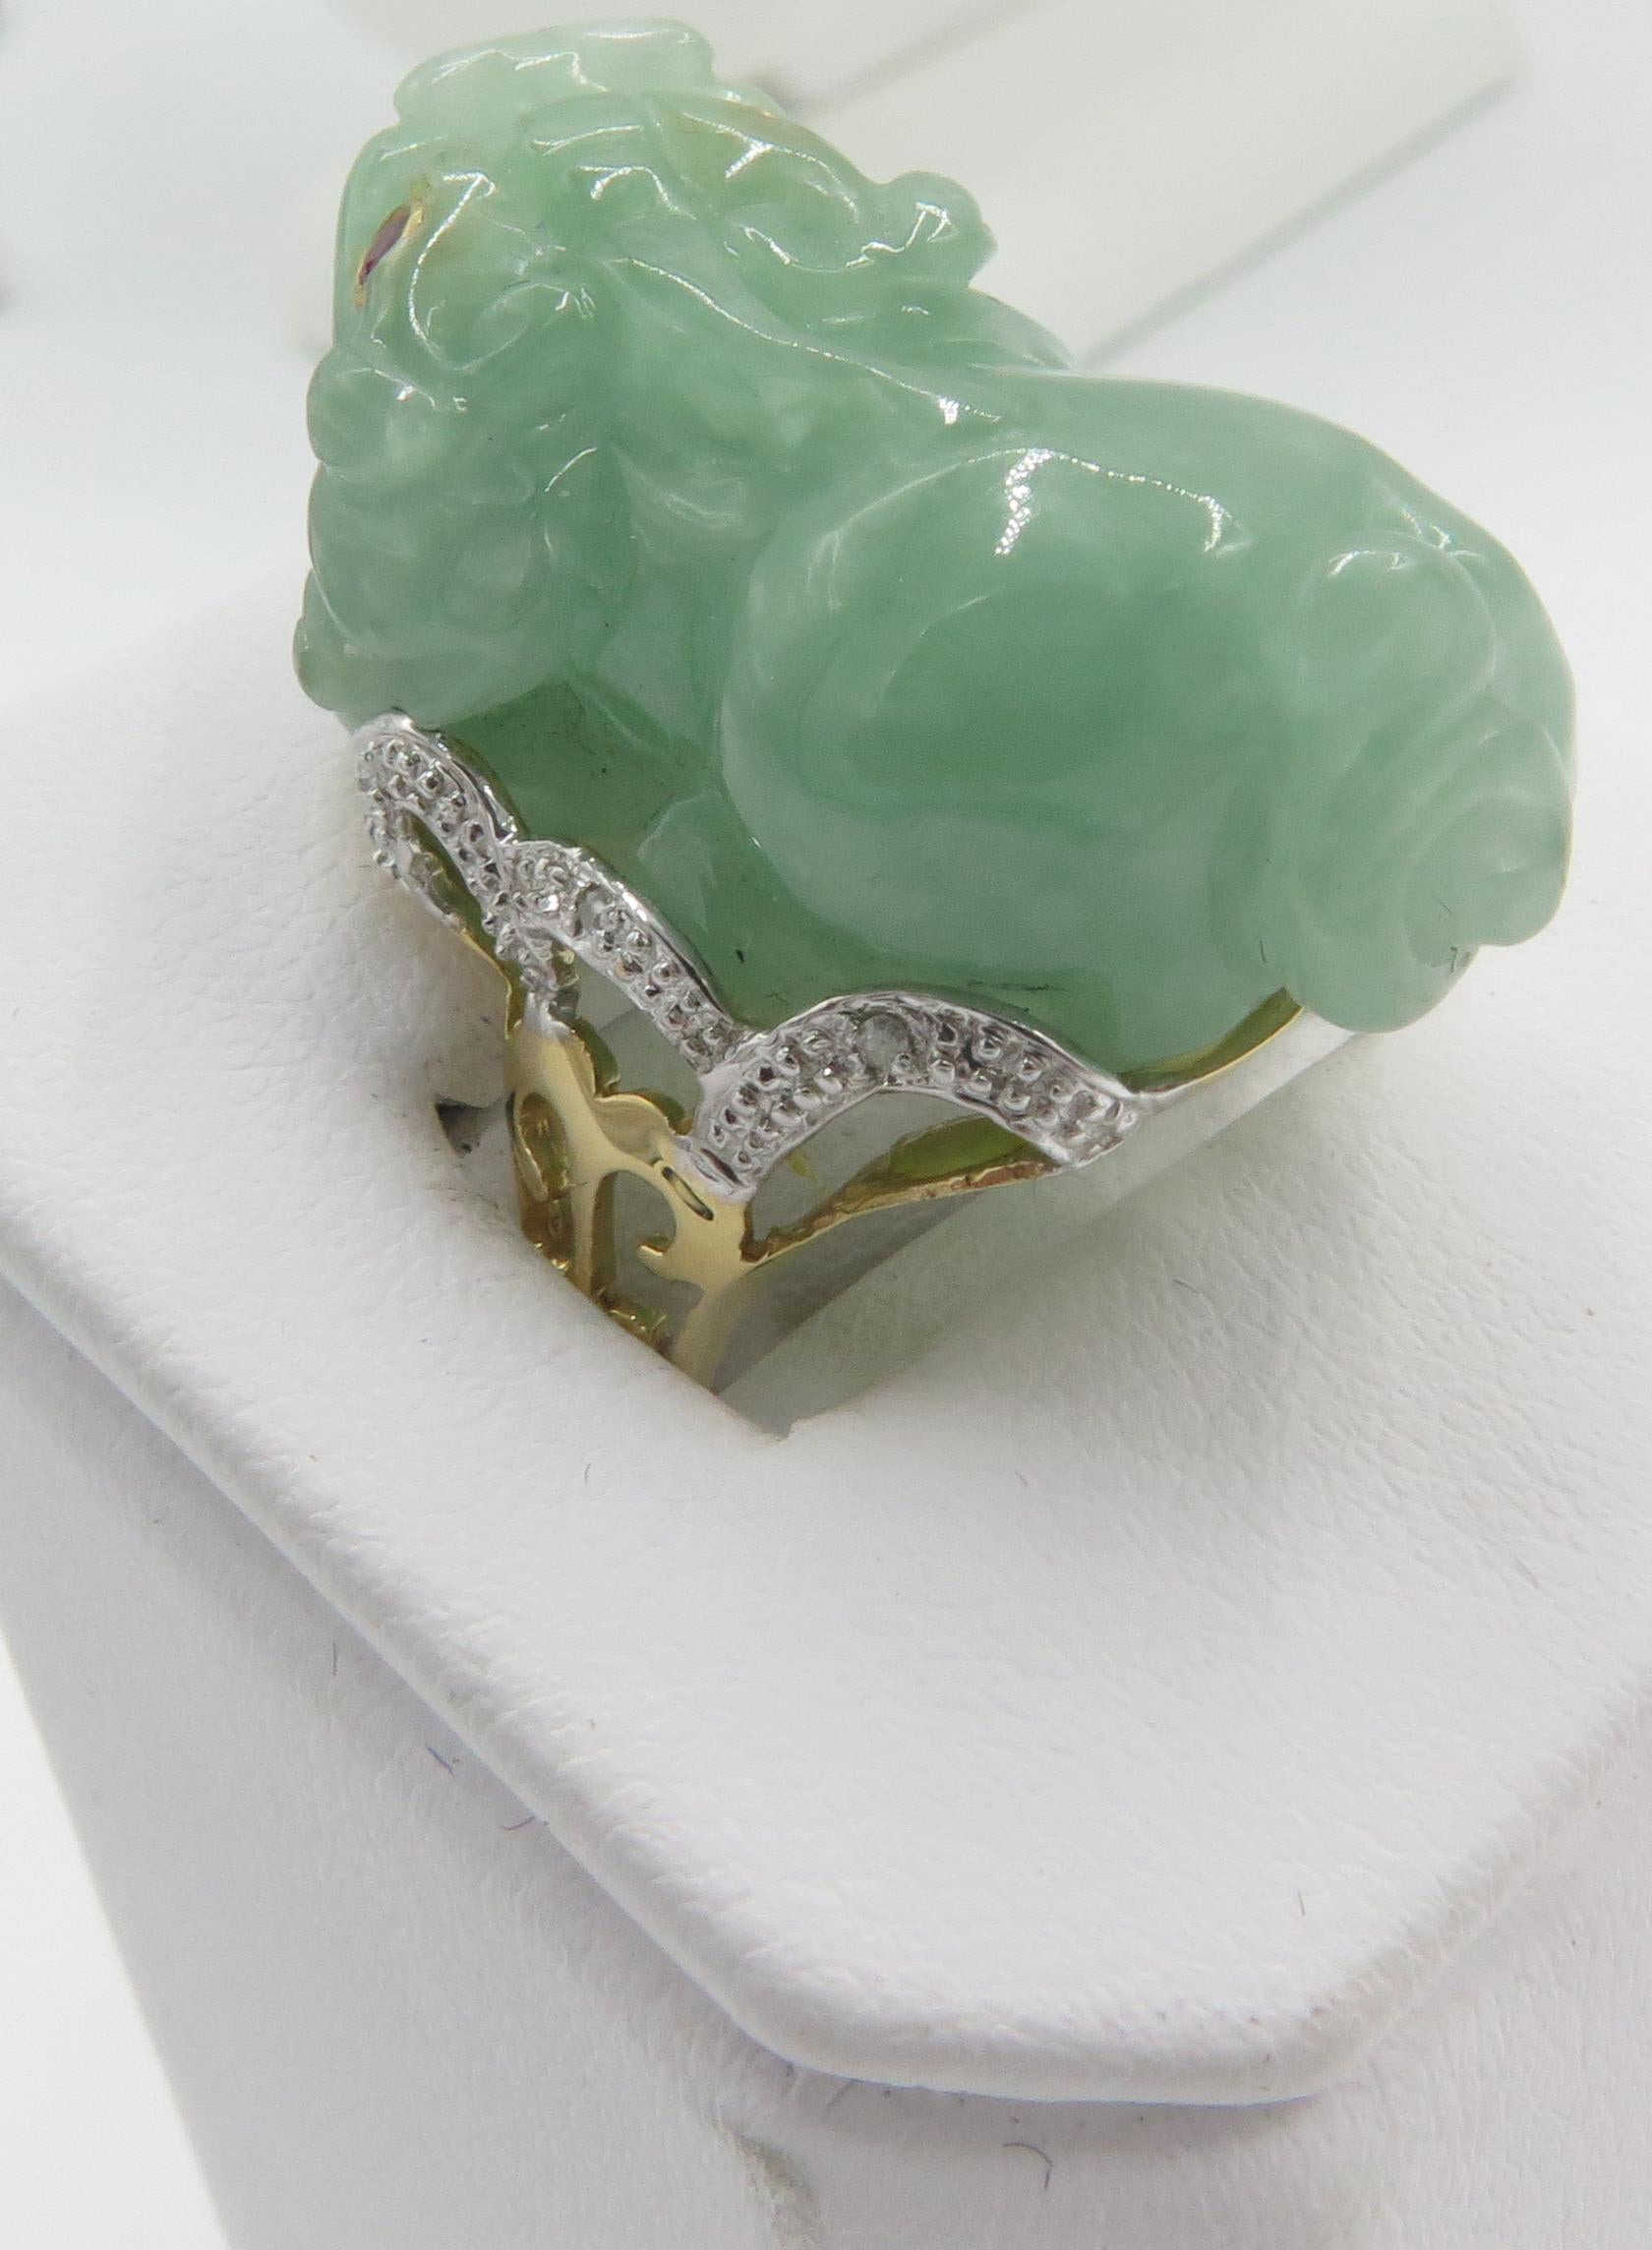 foo dog jade pendant